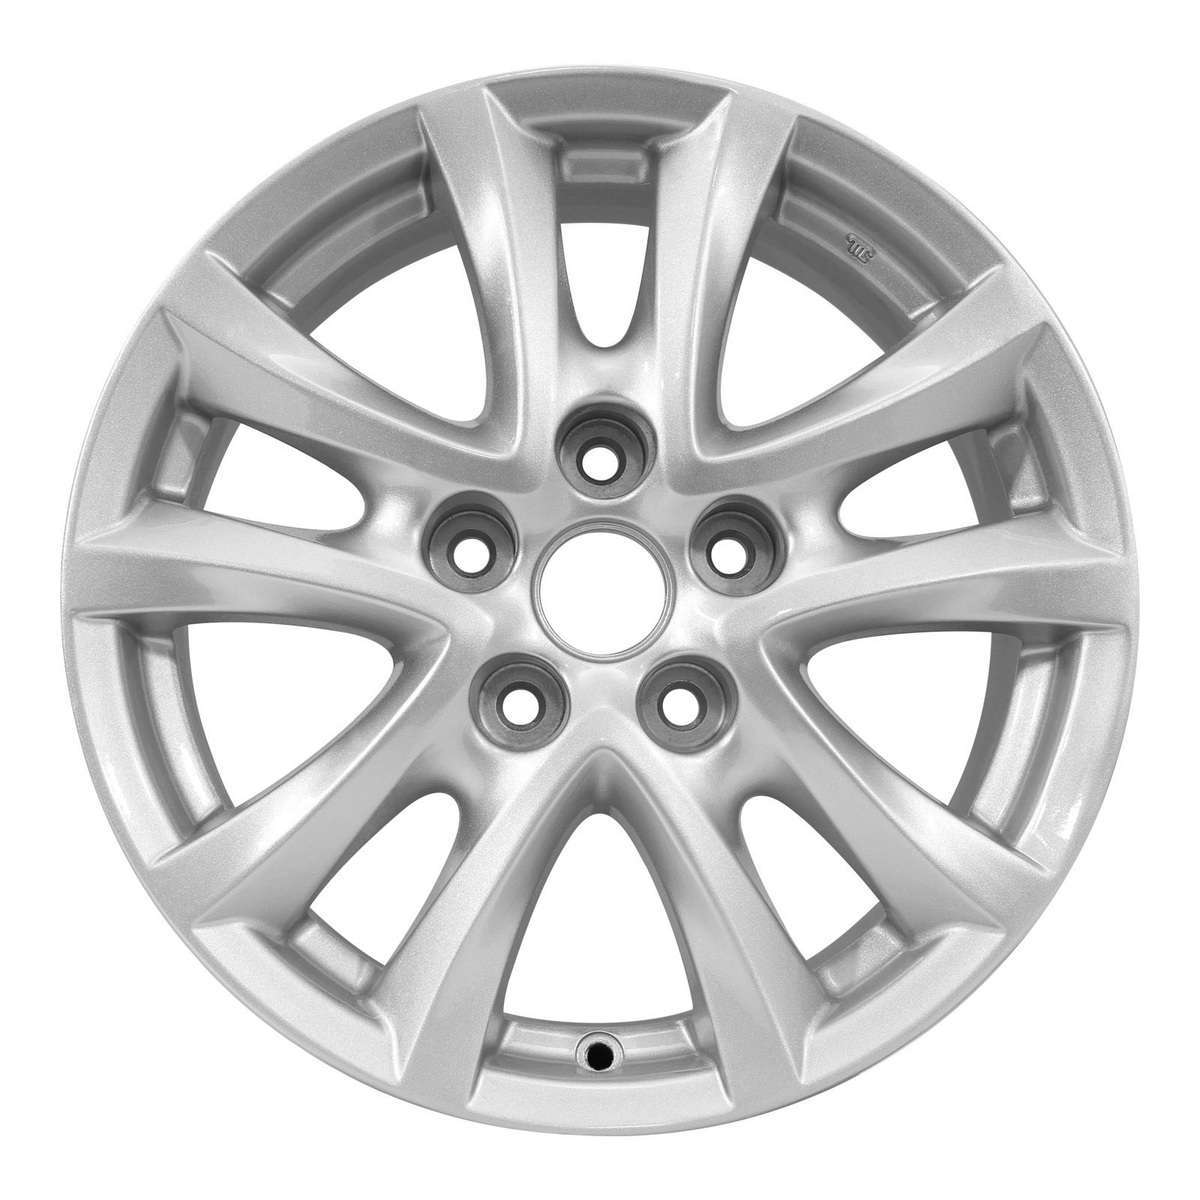 2016 Mazda 3 New 16" Replacement Wheel Rim RW64961S